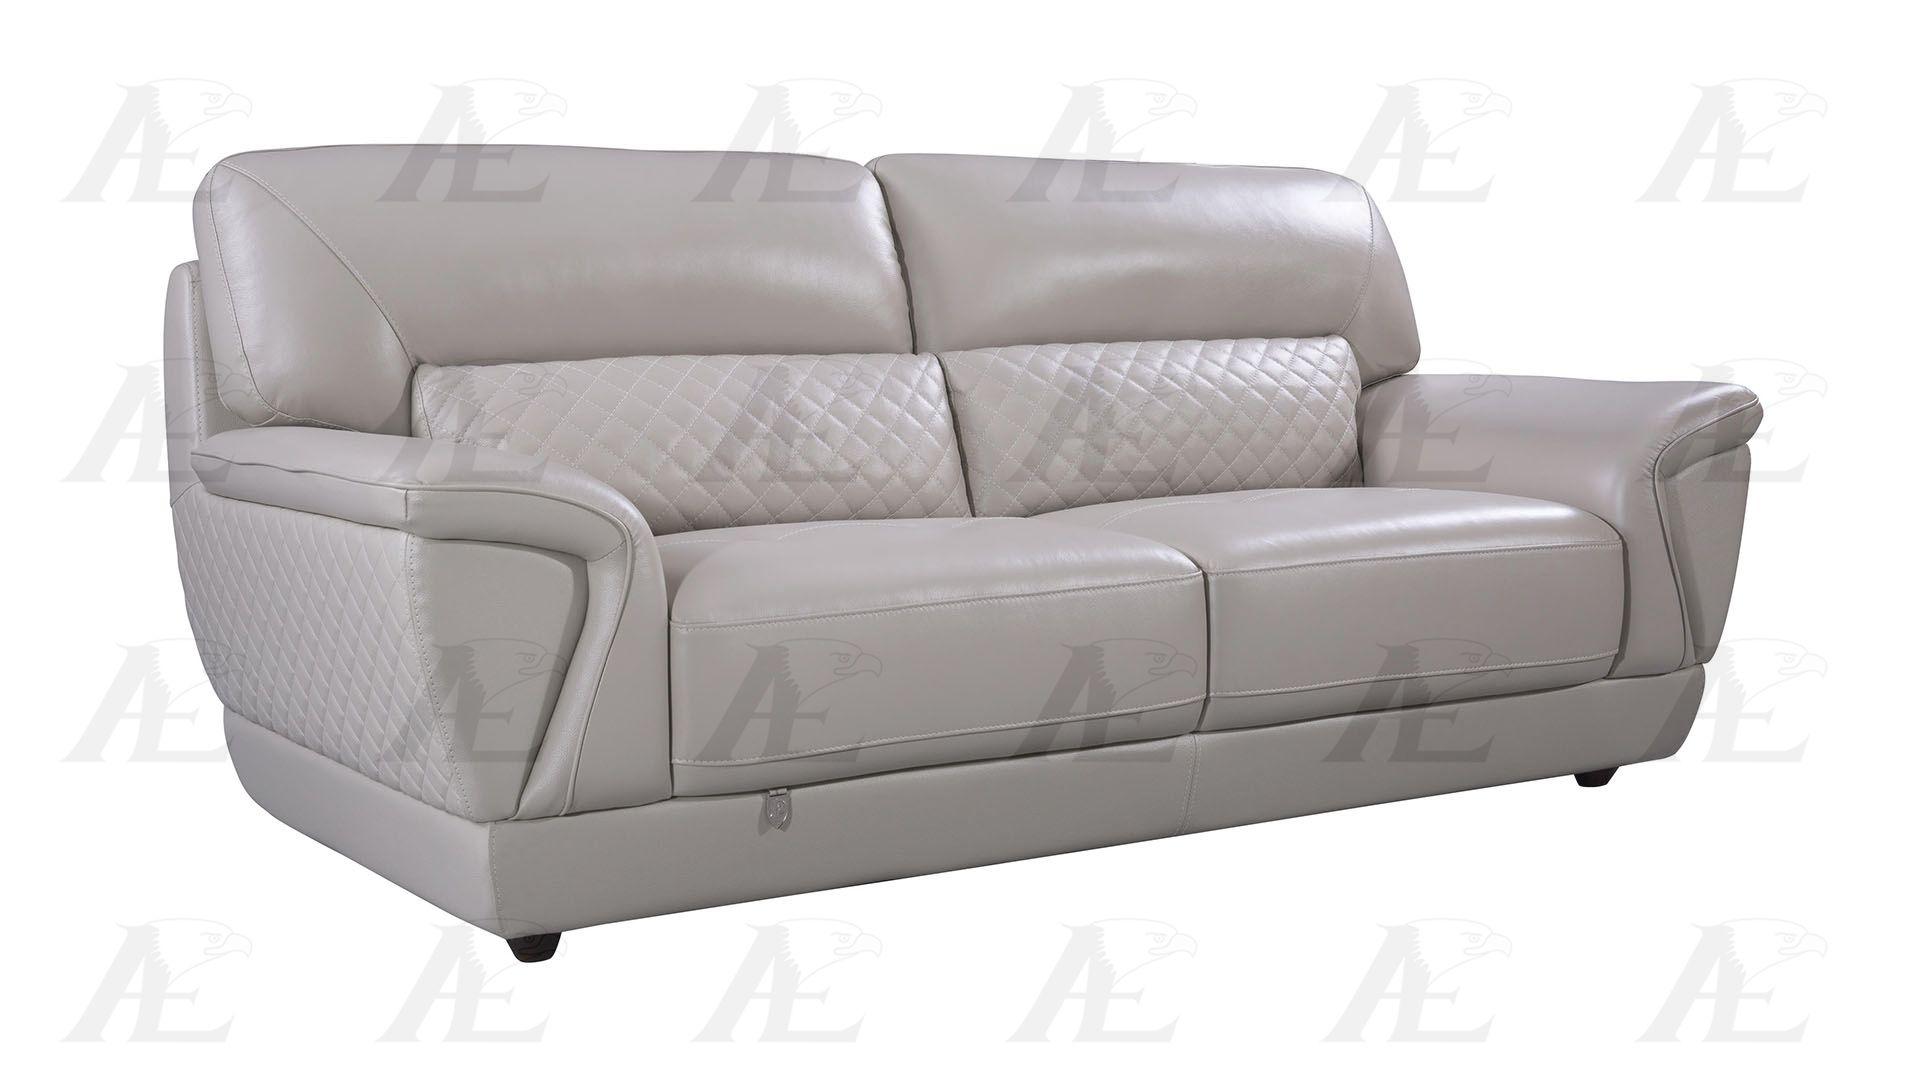 

    
EK099-LG- Set-3 American Eagle Furniture Sofa Set
